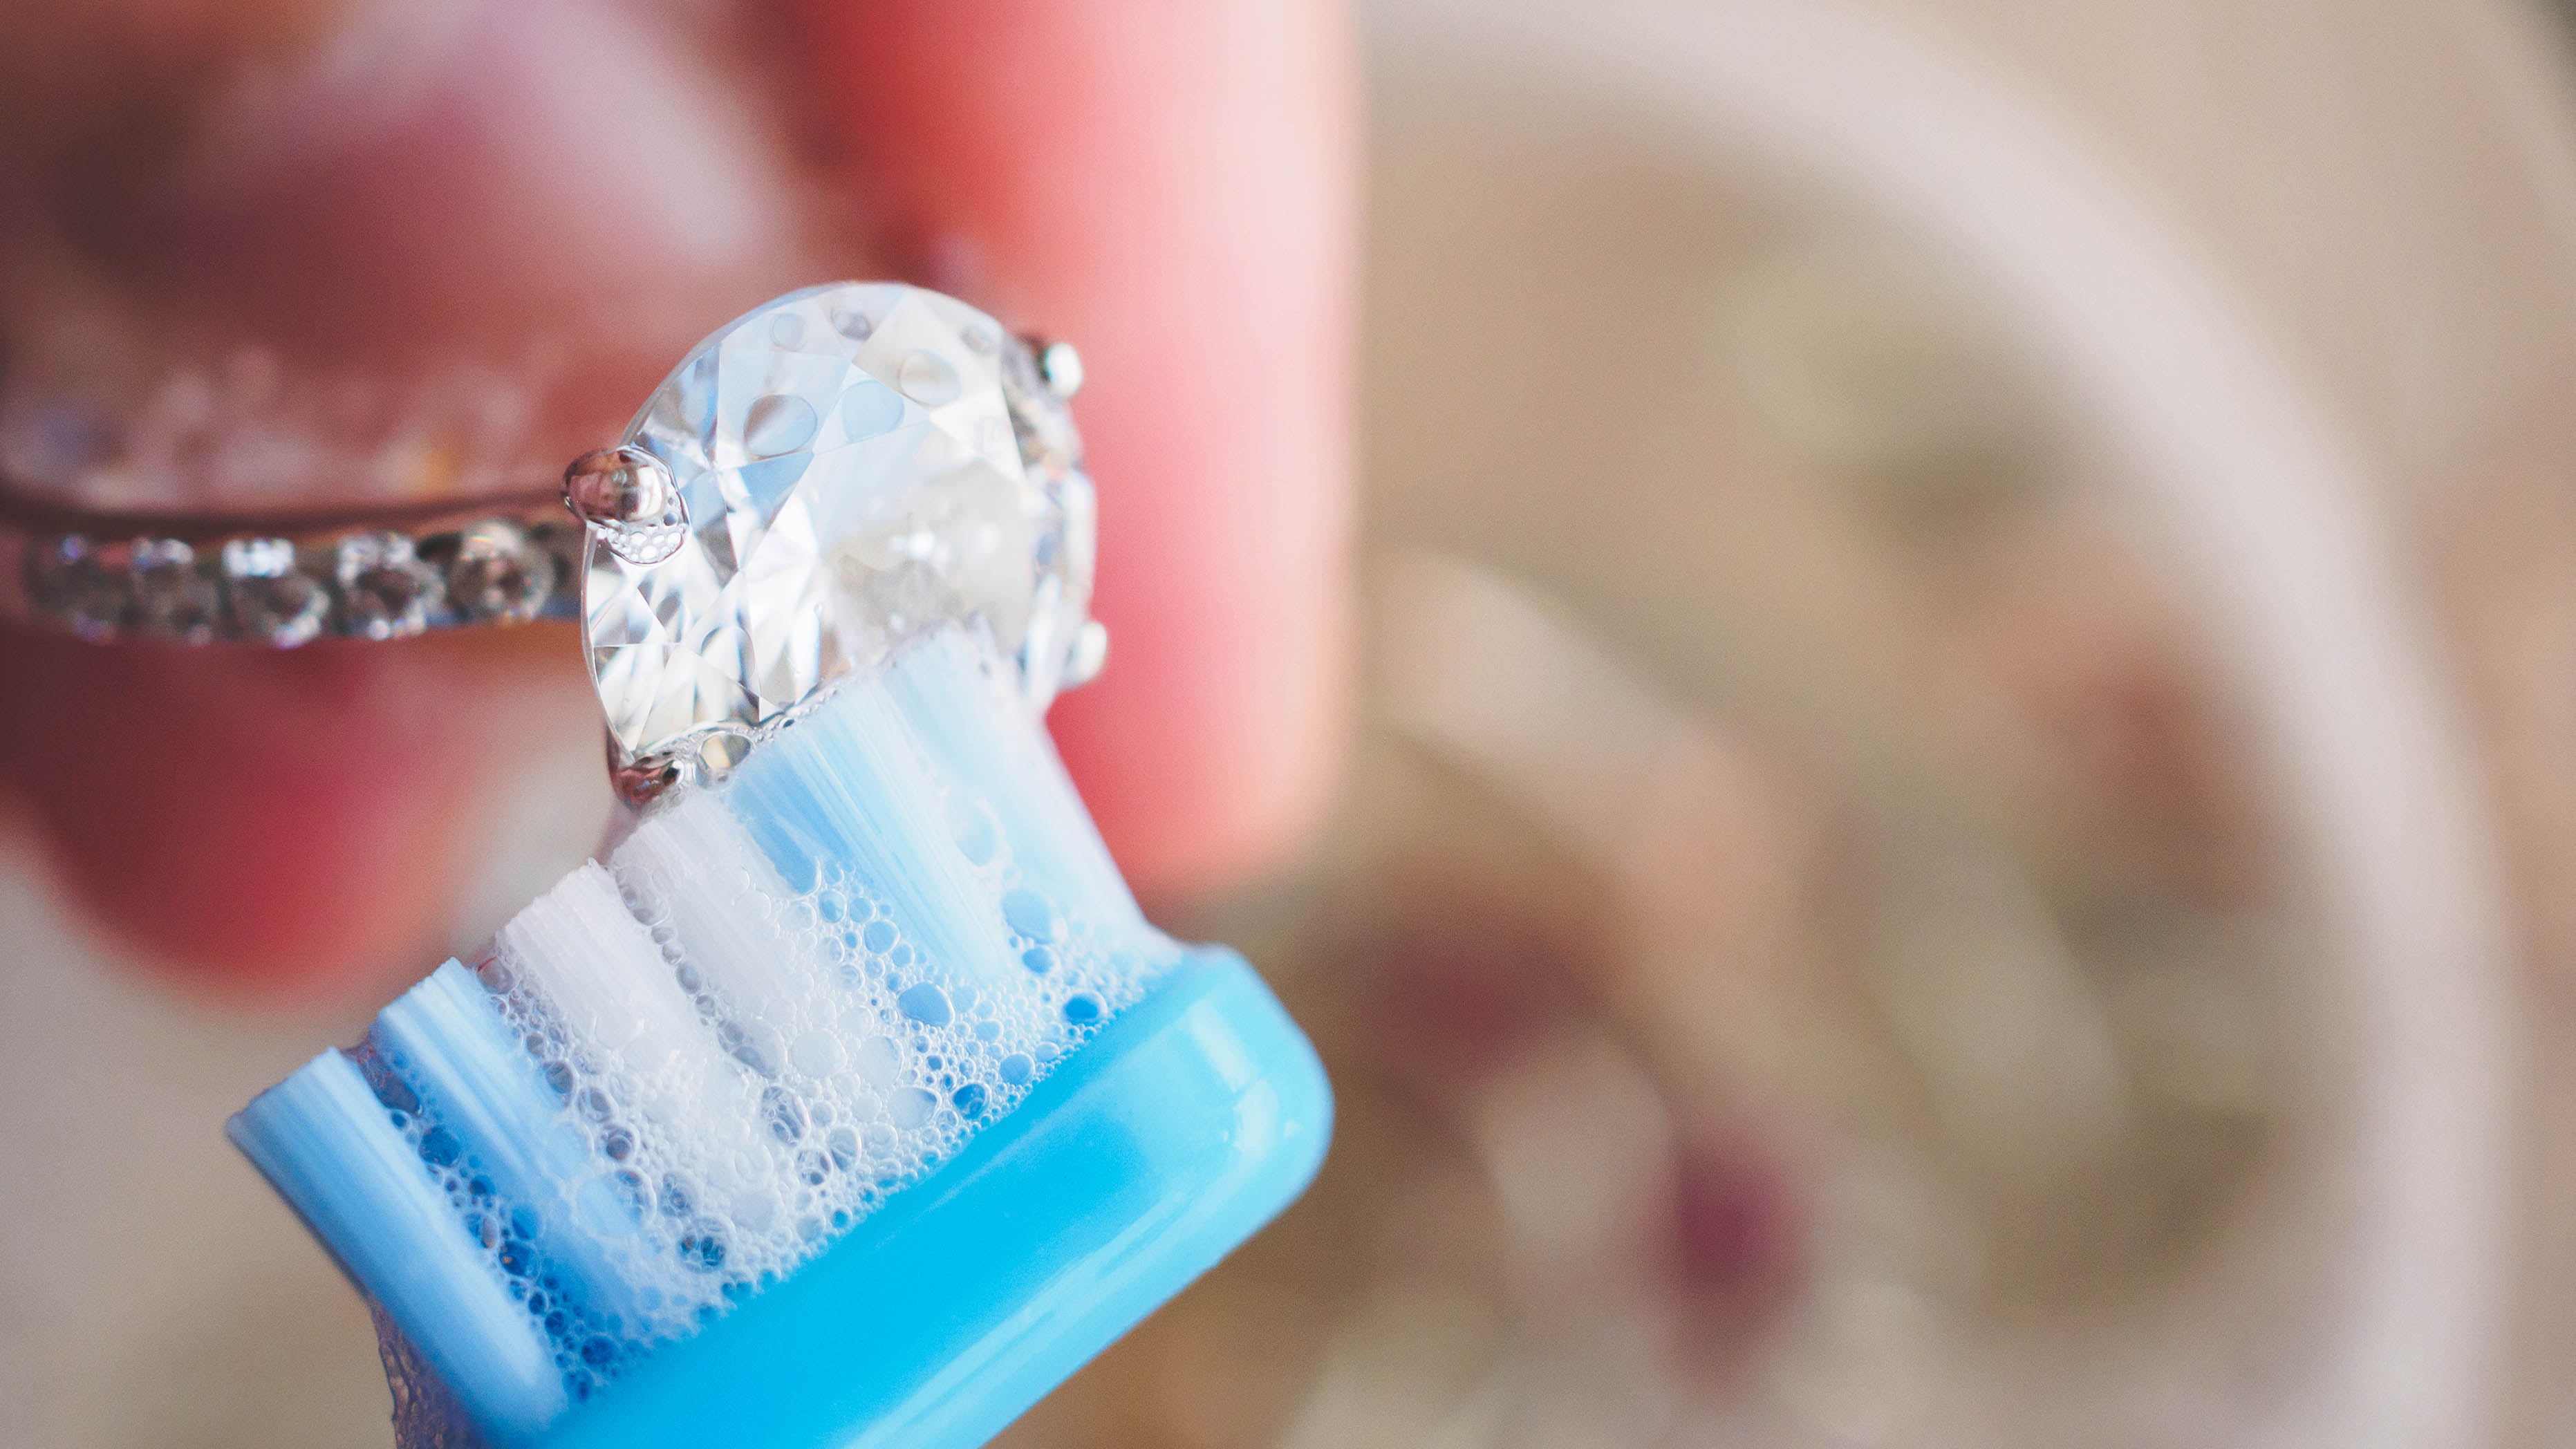 Toothbrush cleaning diamond ring